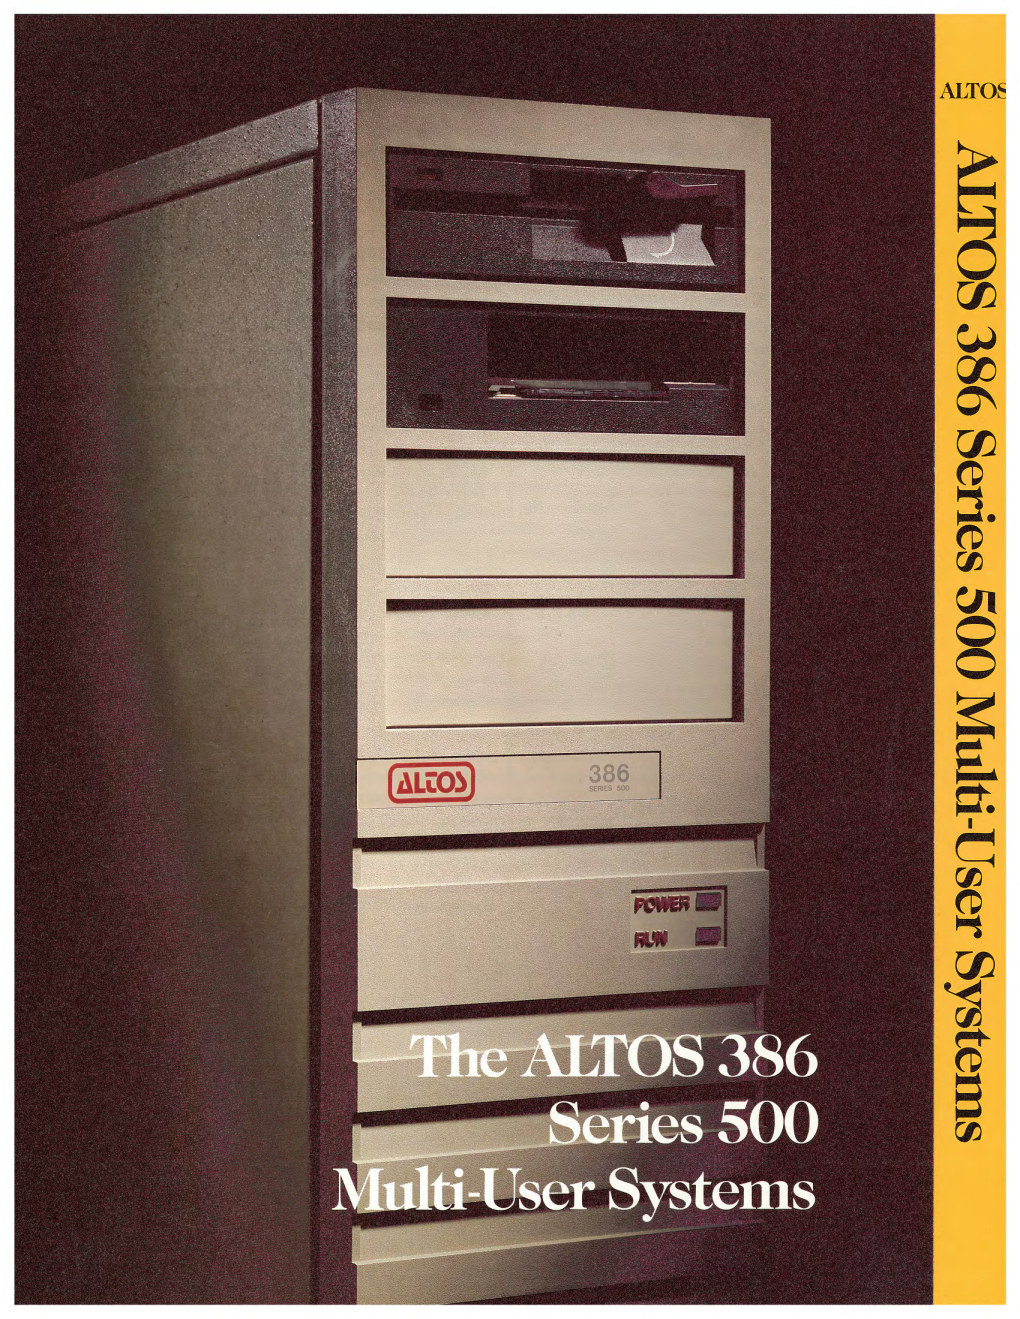 Altos 386 Series 500 Multi-User Systems